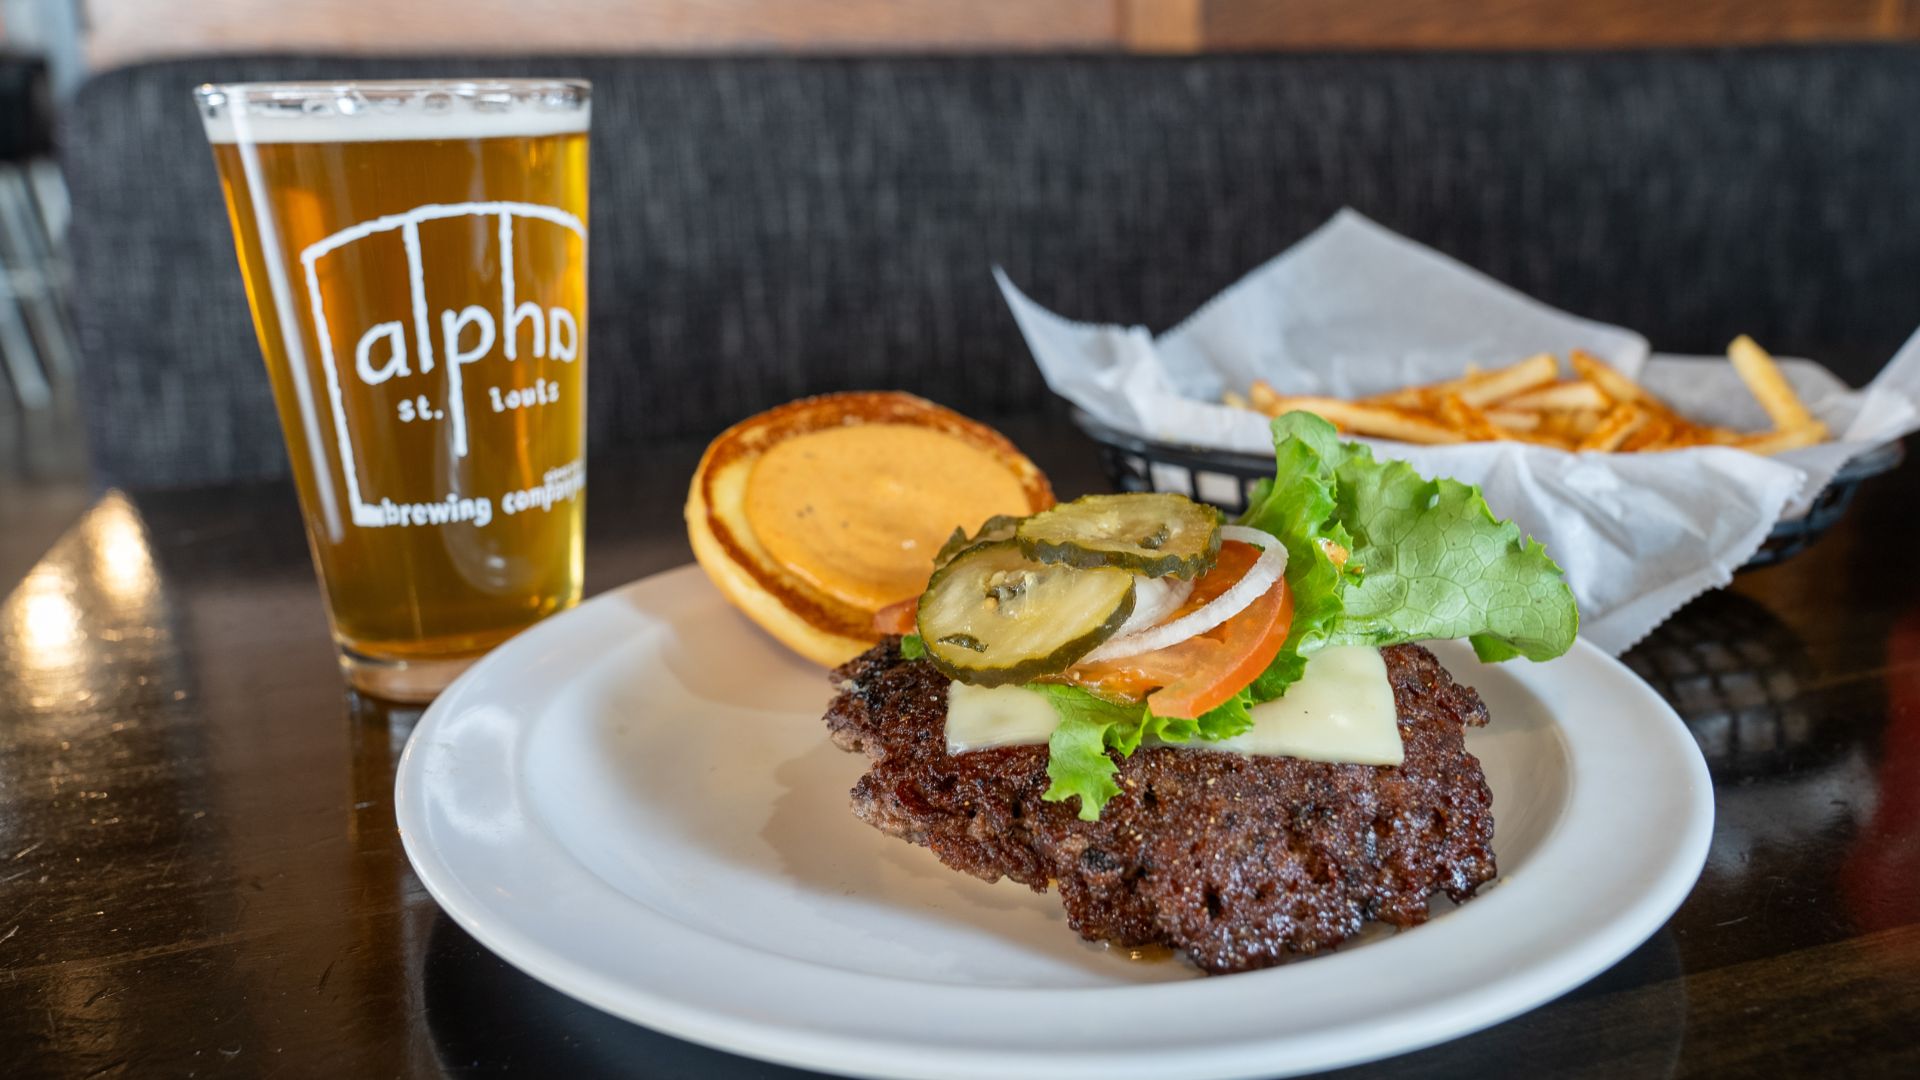 Alpha Brewing Company serves a classic hamburger alongside its sour beers.